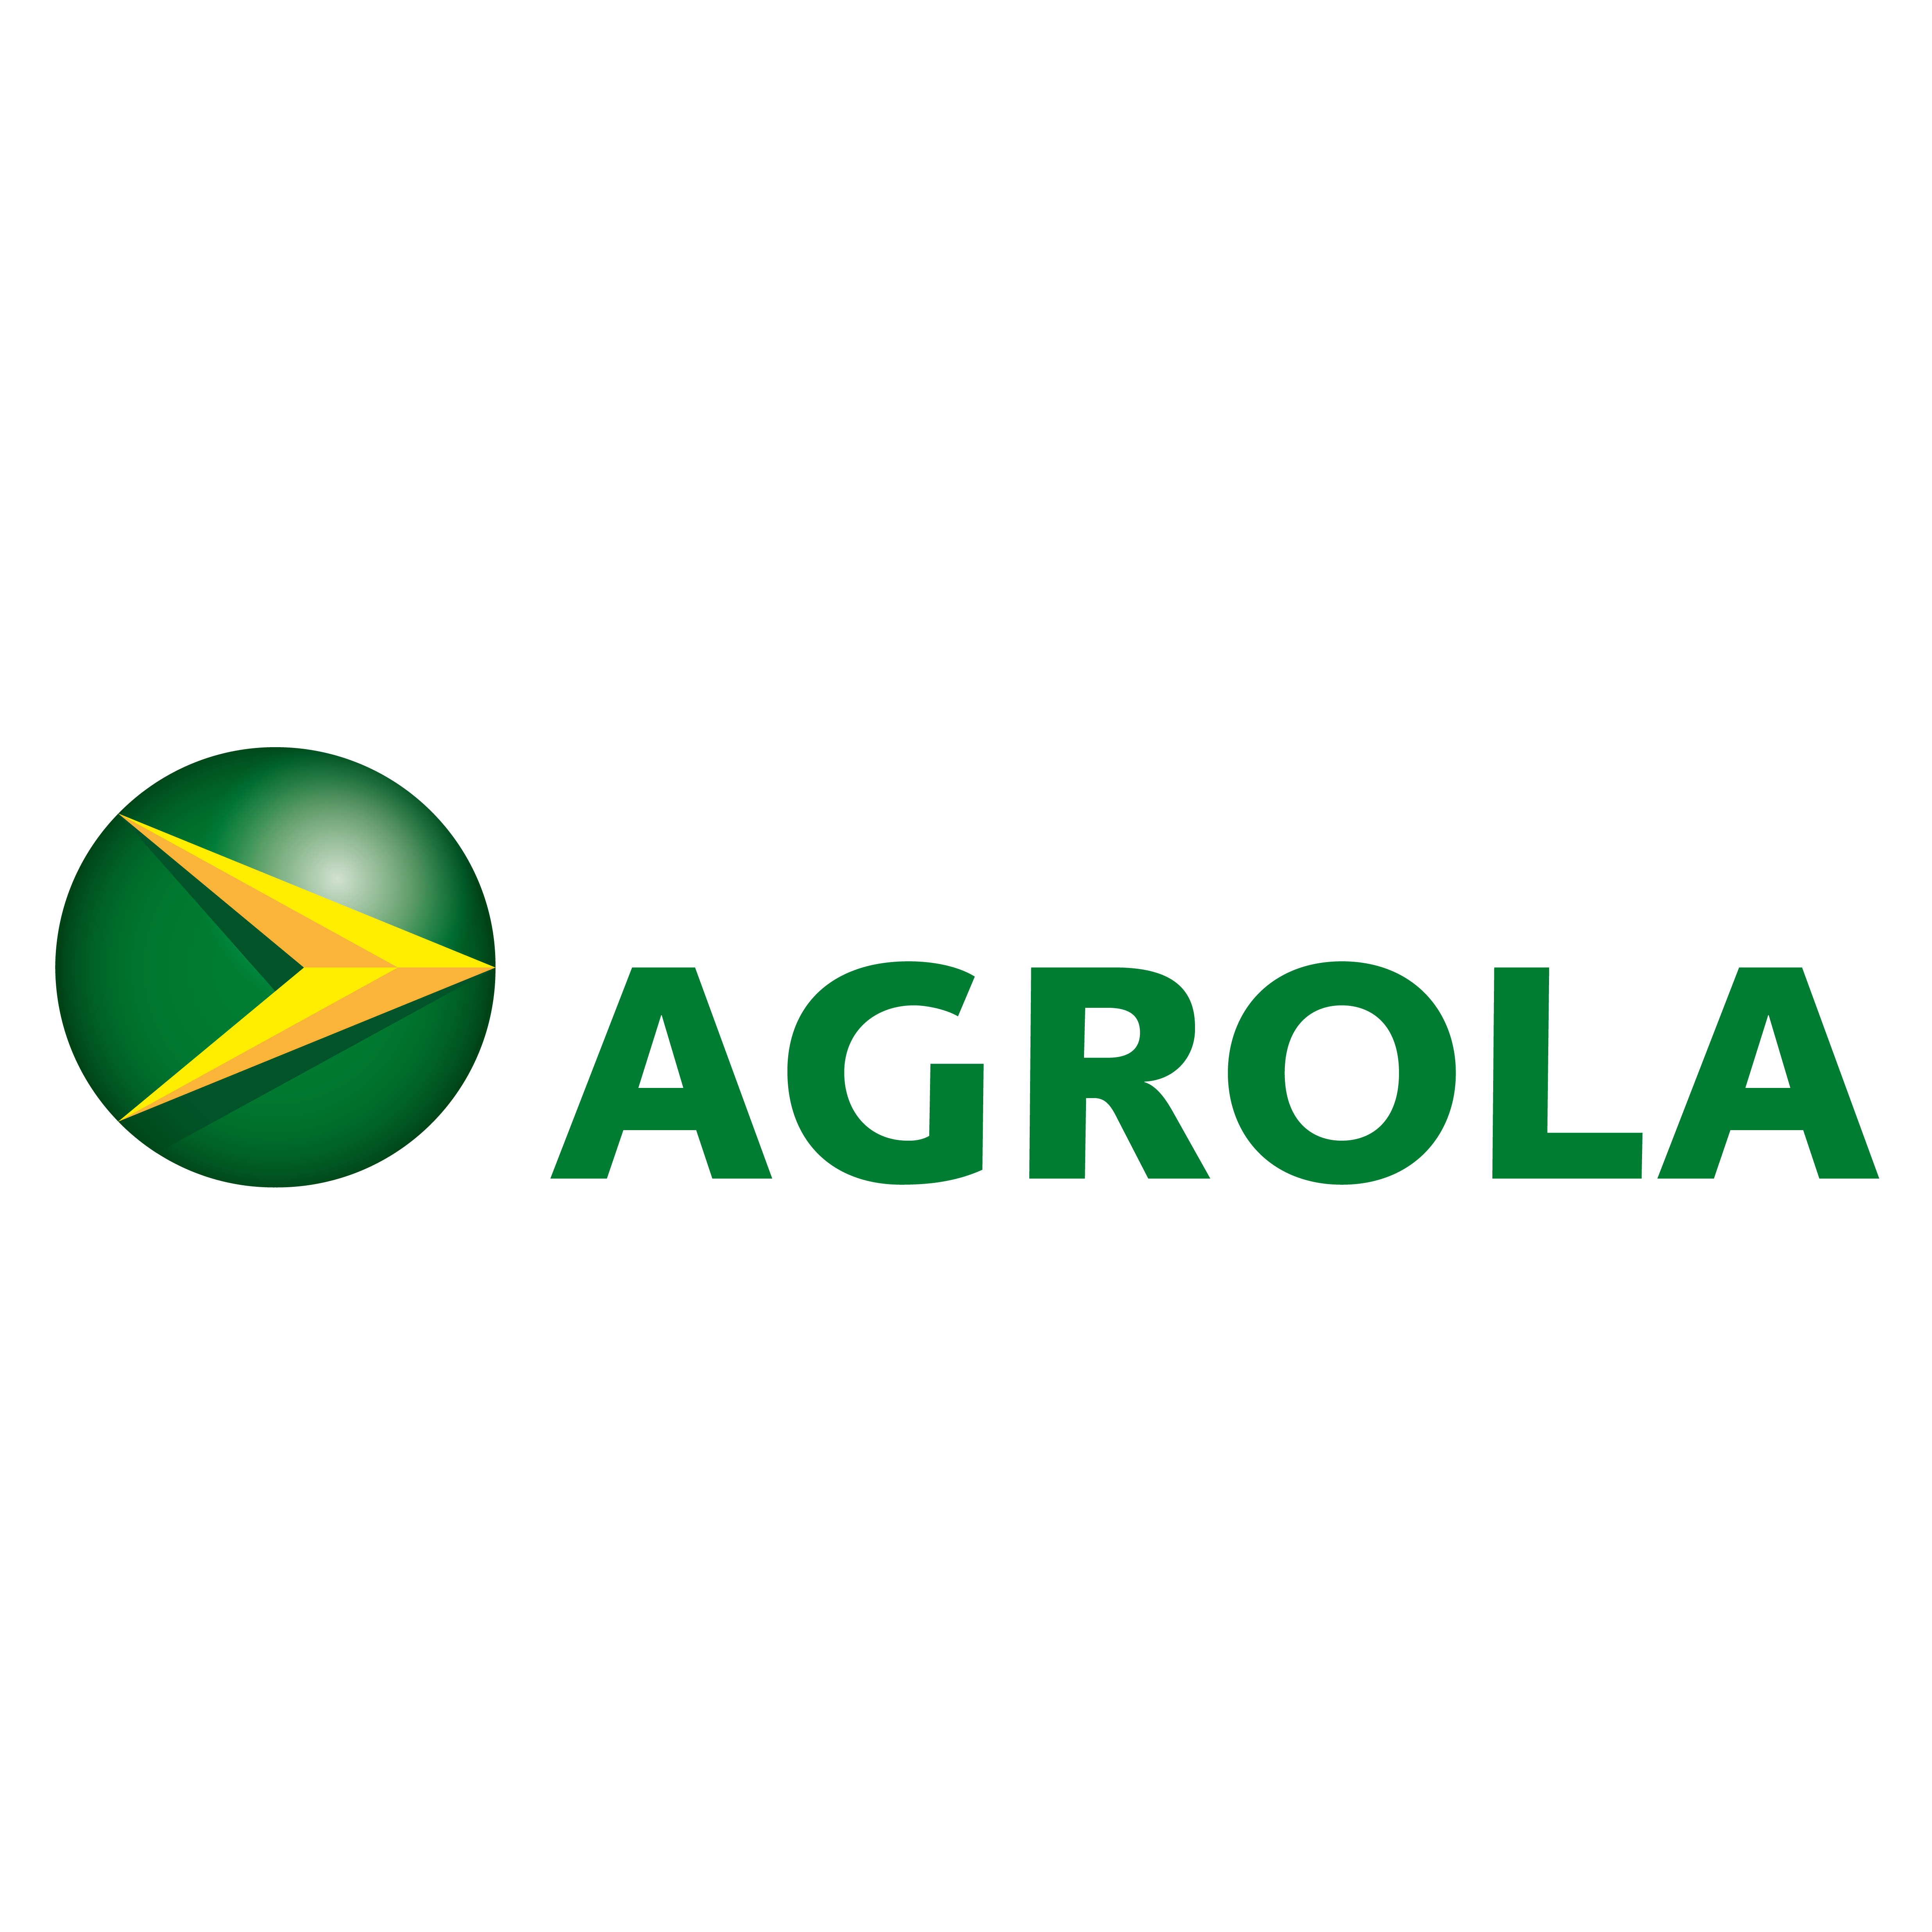 Agrola Logo